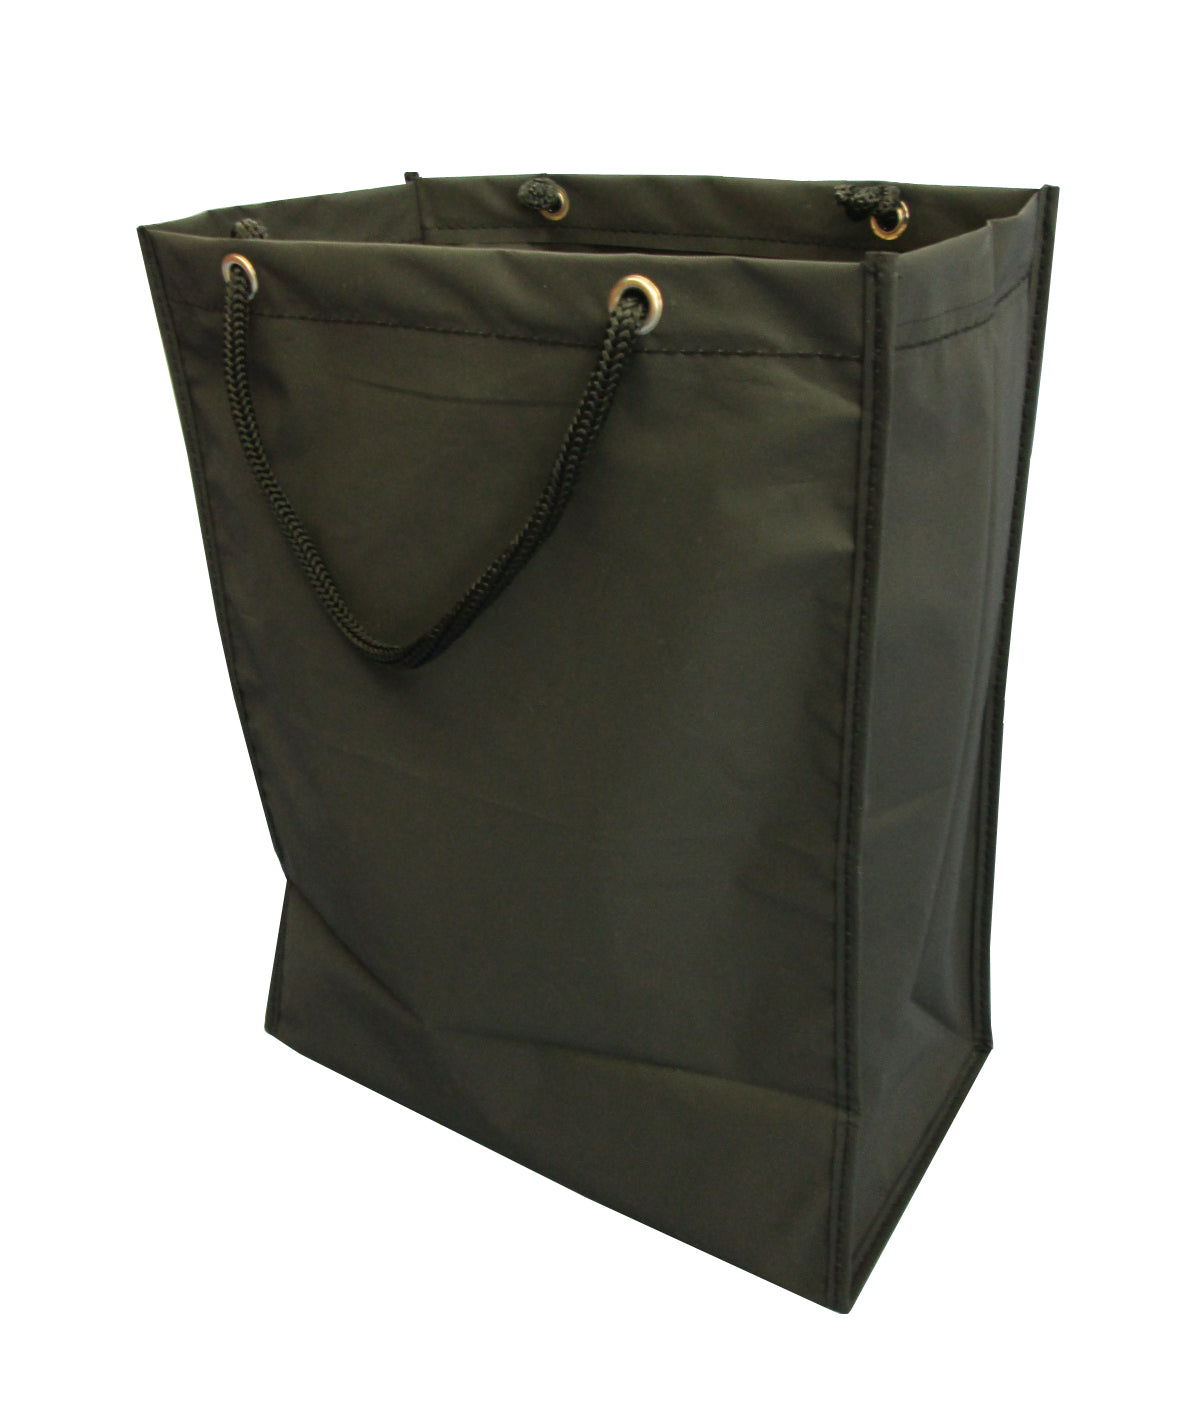 JLSB-0054 Sewn Bag